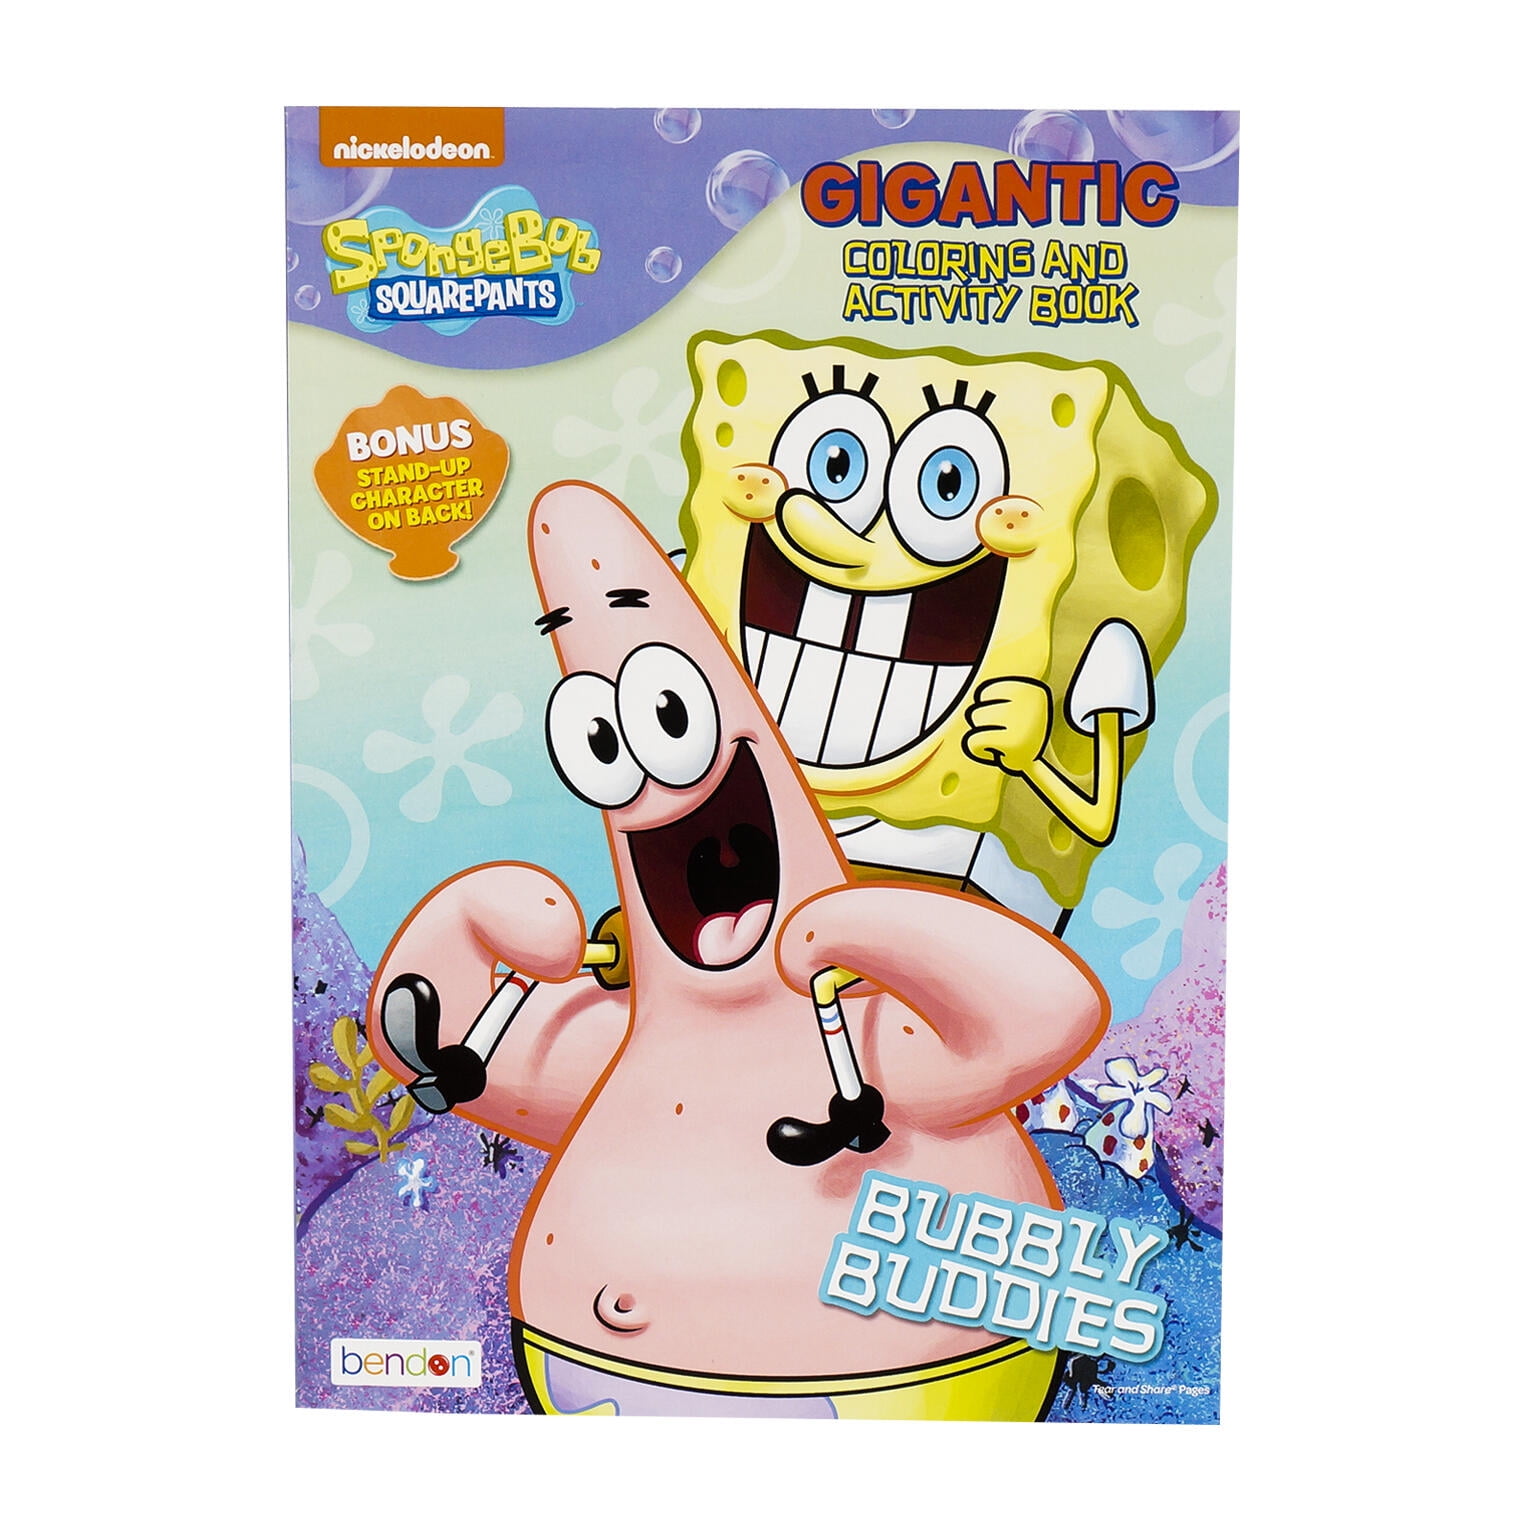 Spongebob Squarepants Coloring Book: 30 Illustrations Of Spongebob  Squarepants For Kids To Enjoy Coloring : Publishing, : 9798588809139 :  Blackwell's